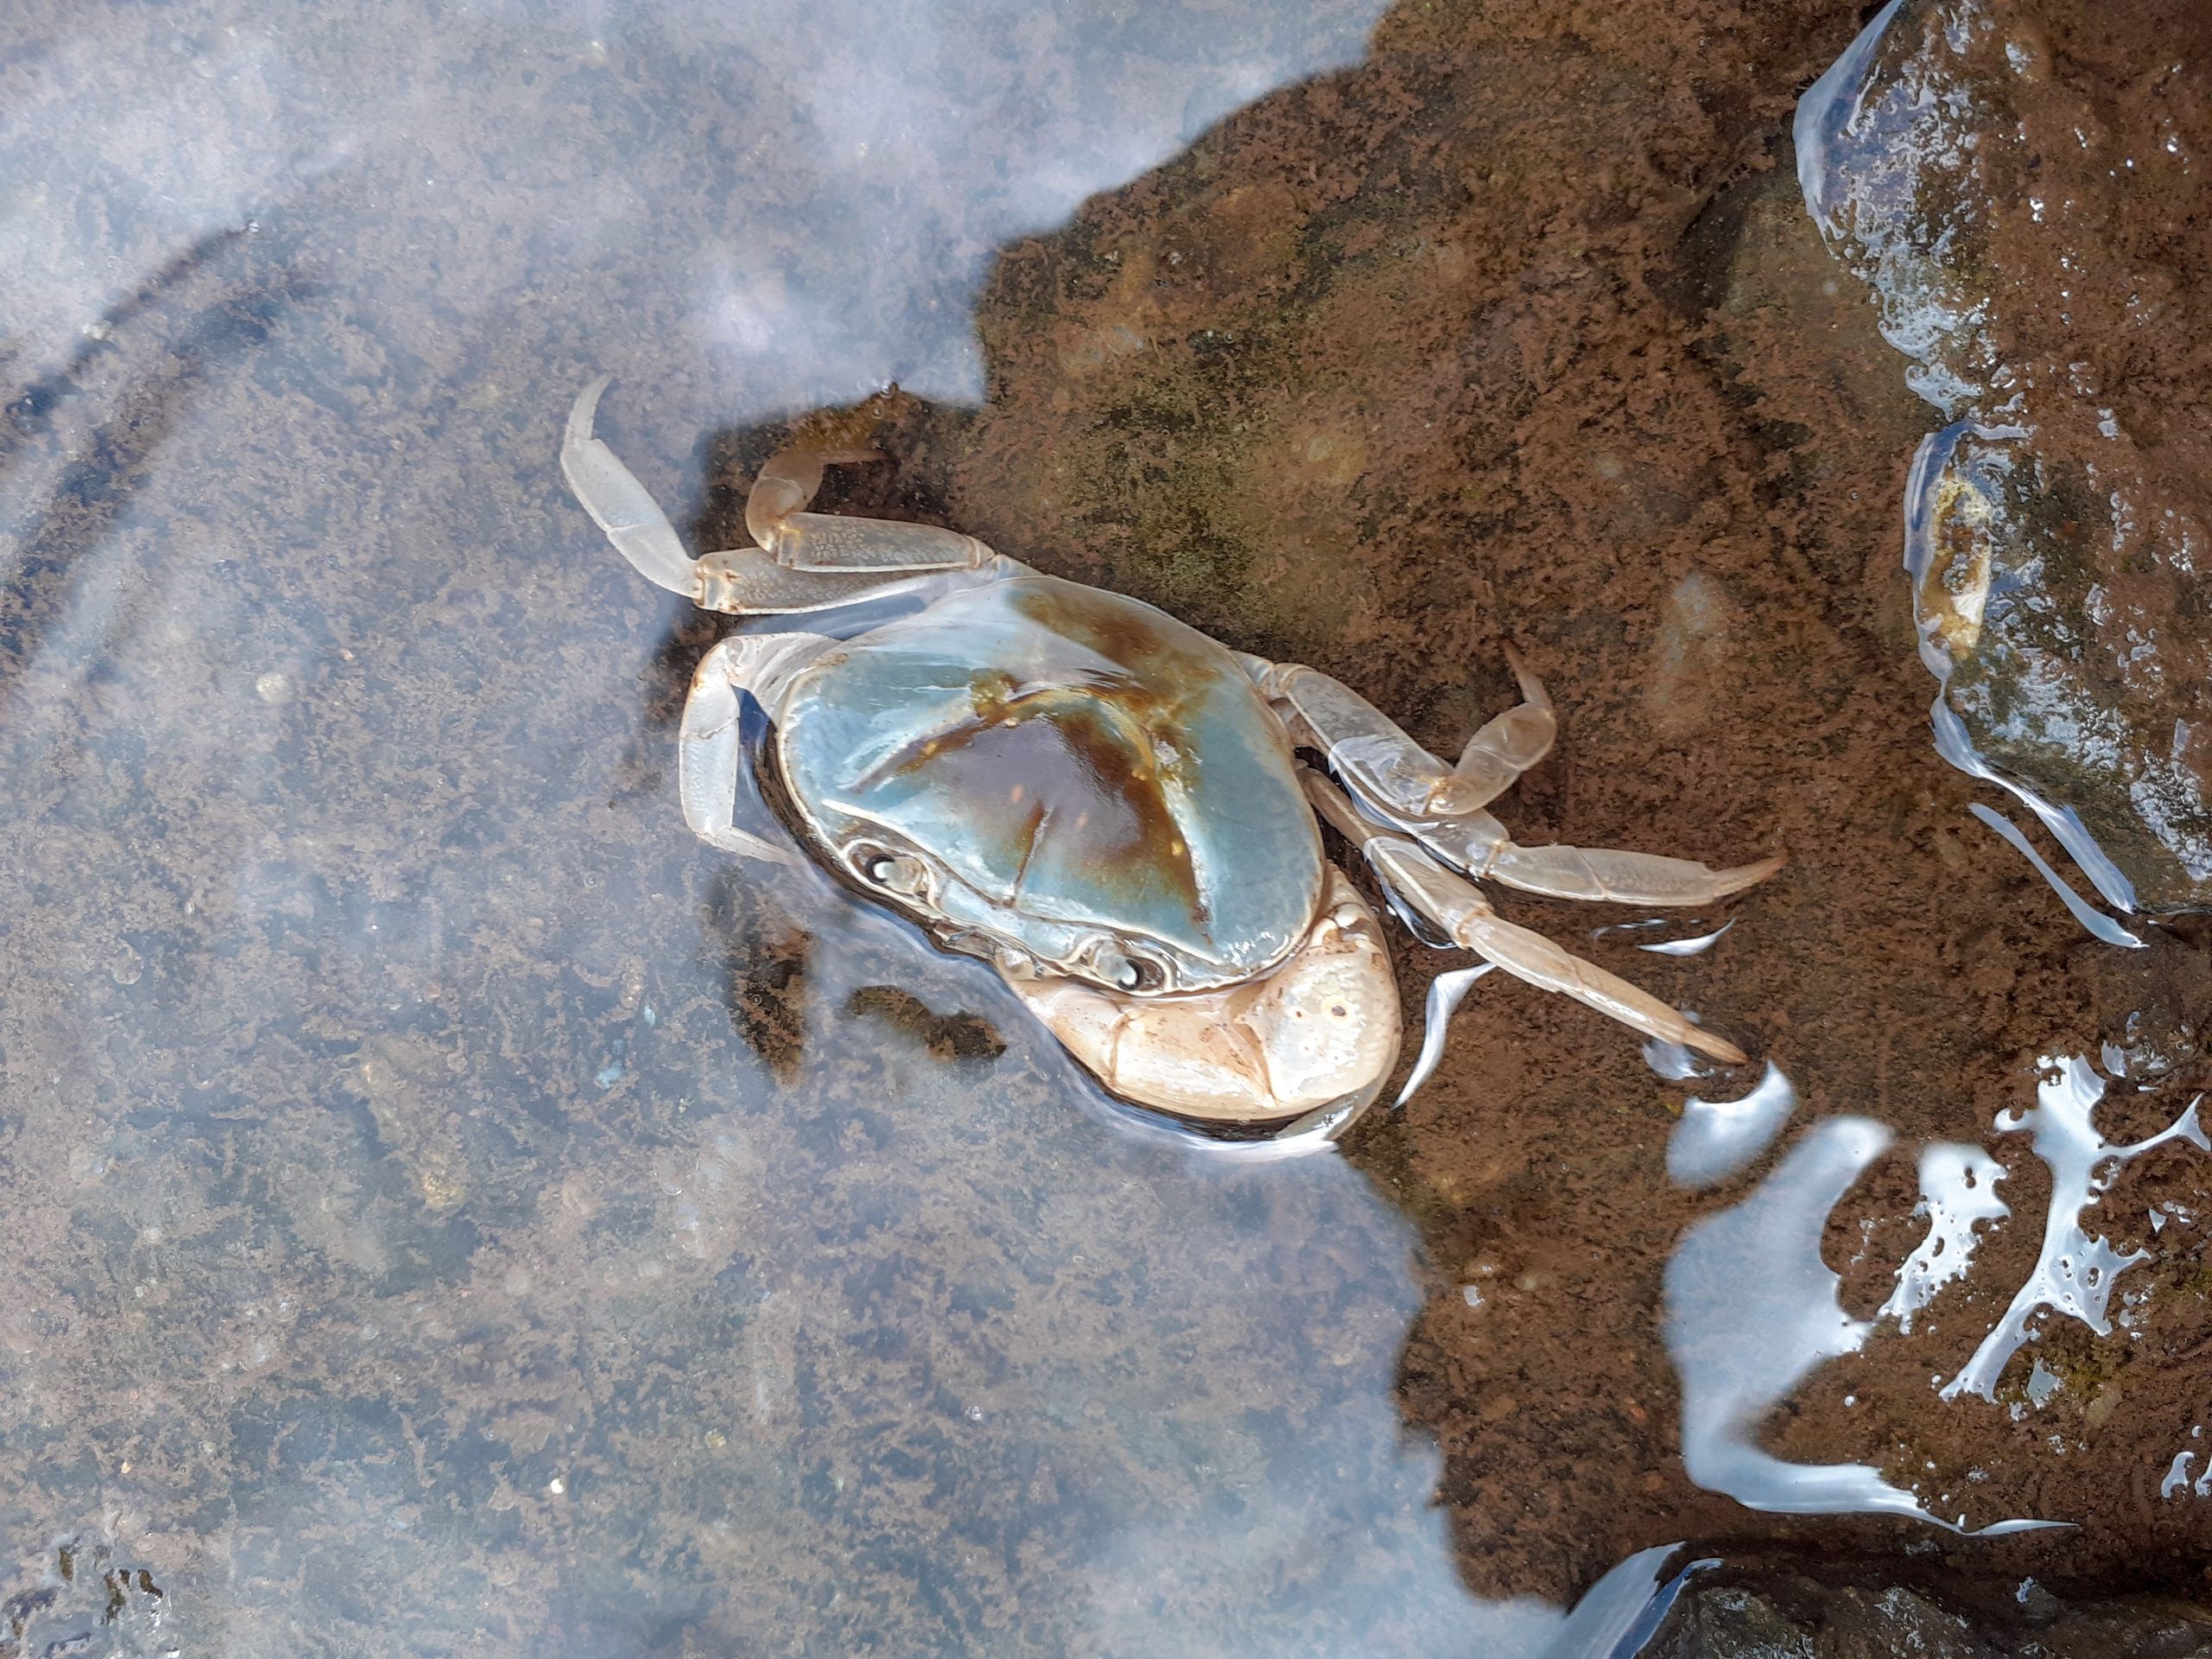 A crab near water